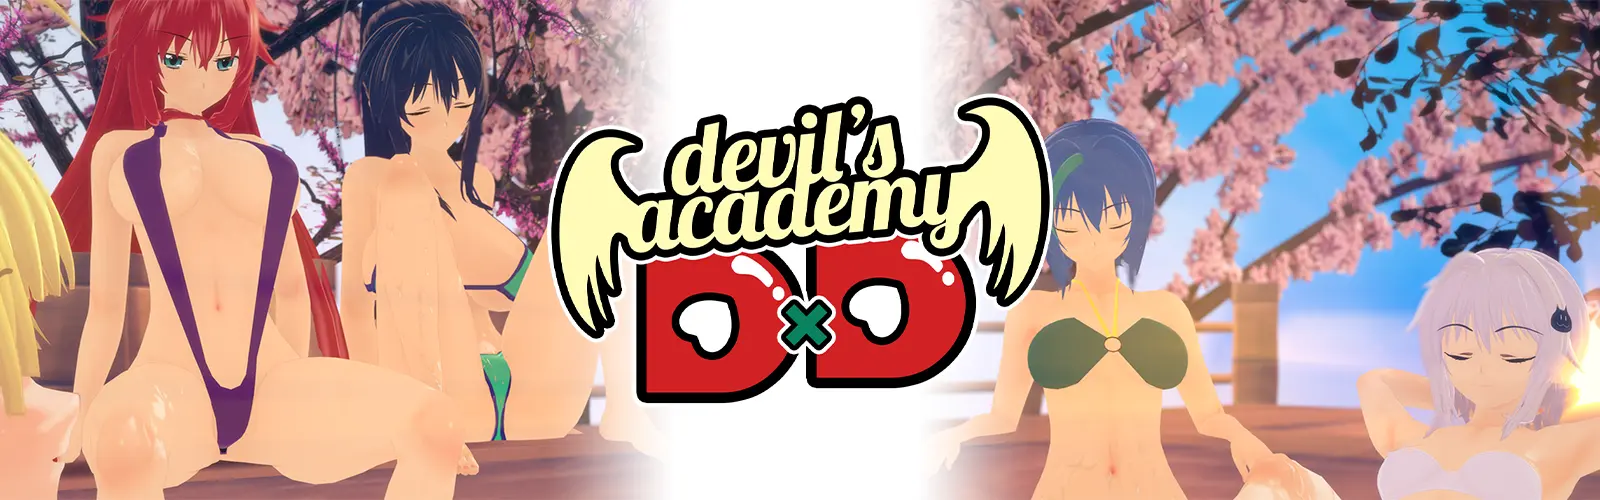 Devil's Academy DxD main image